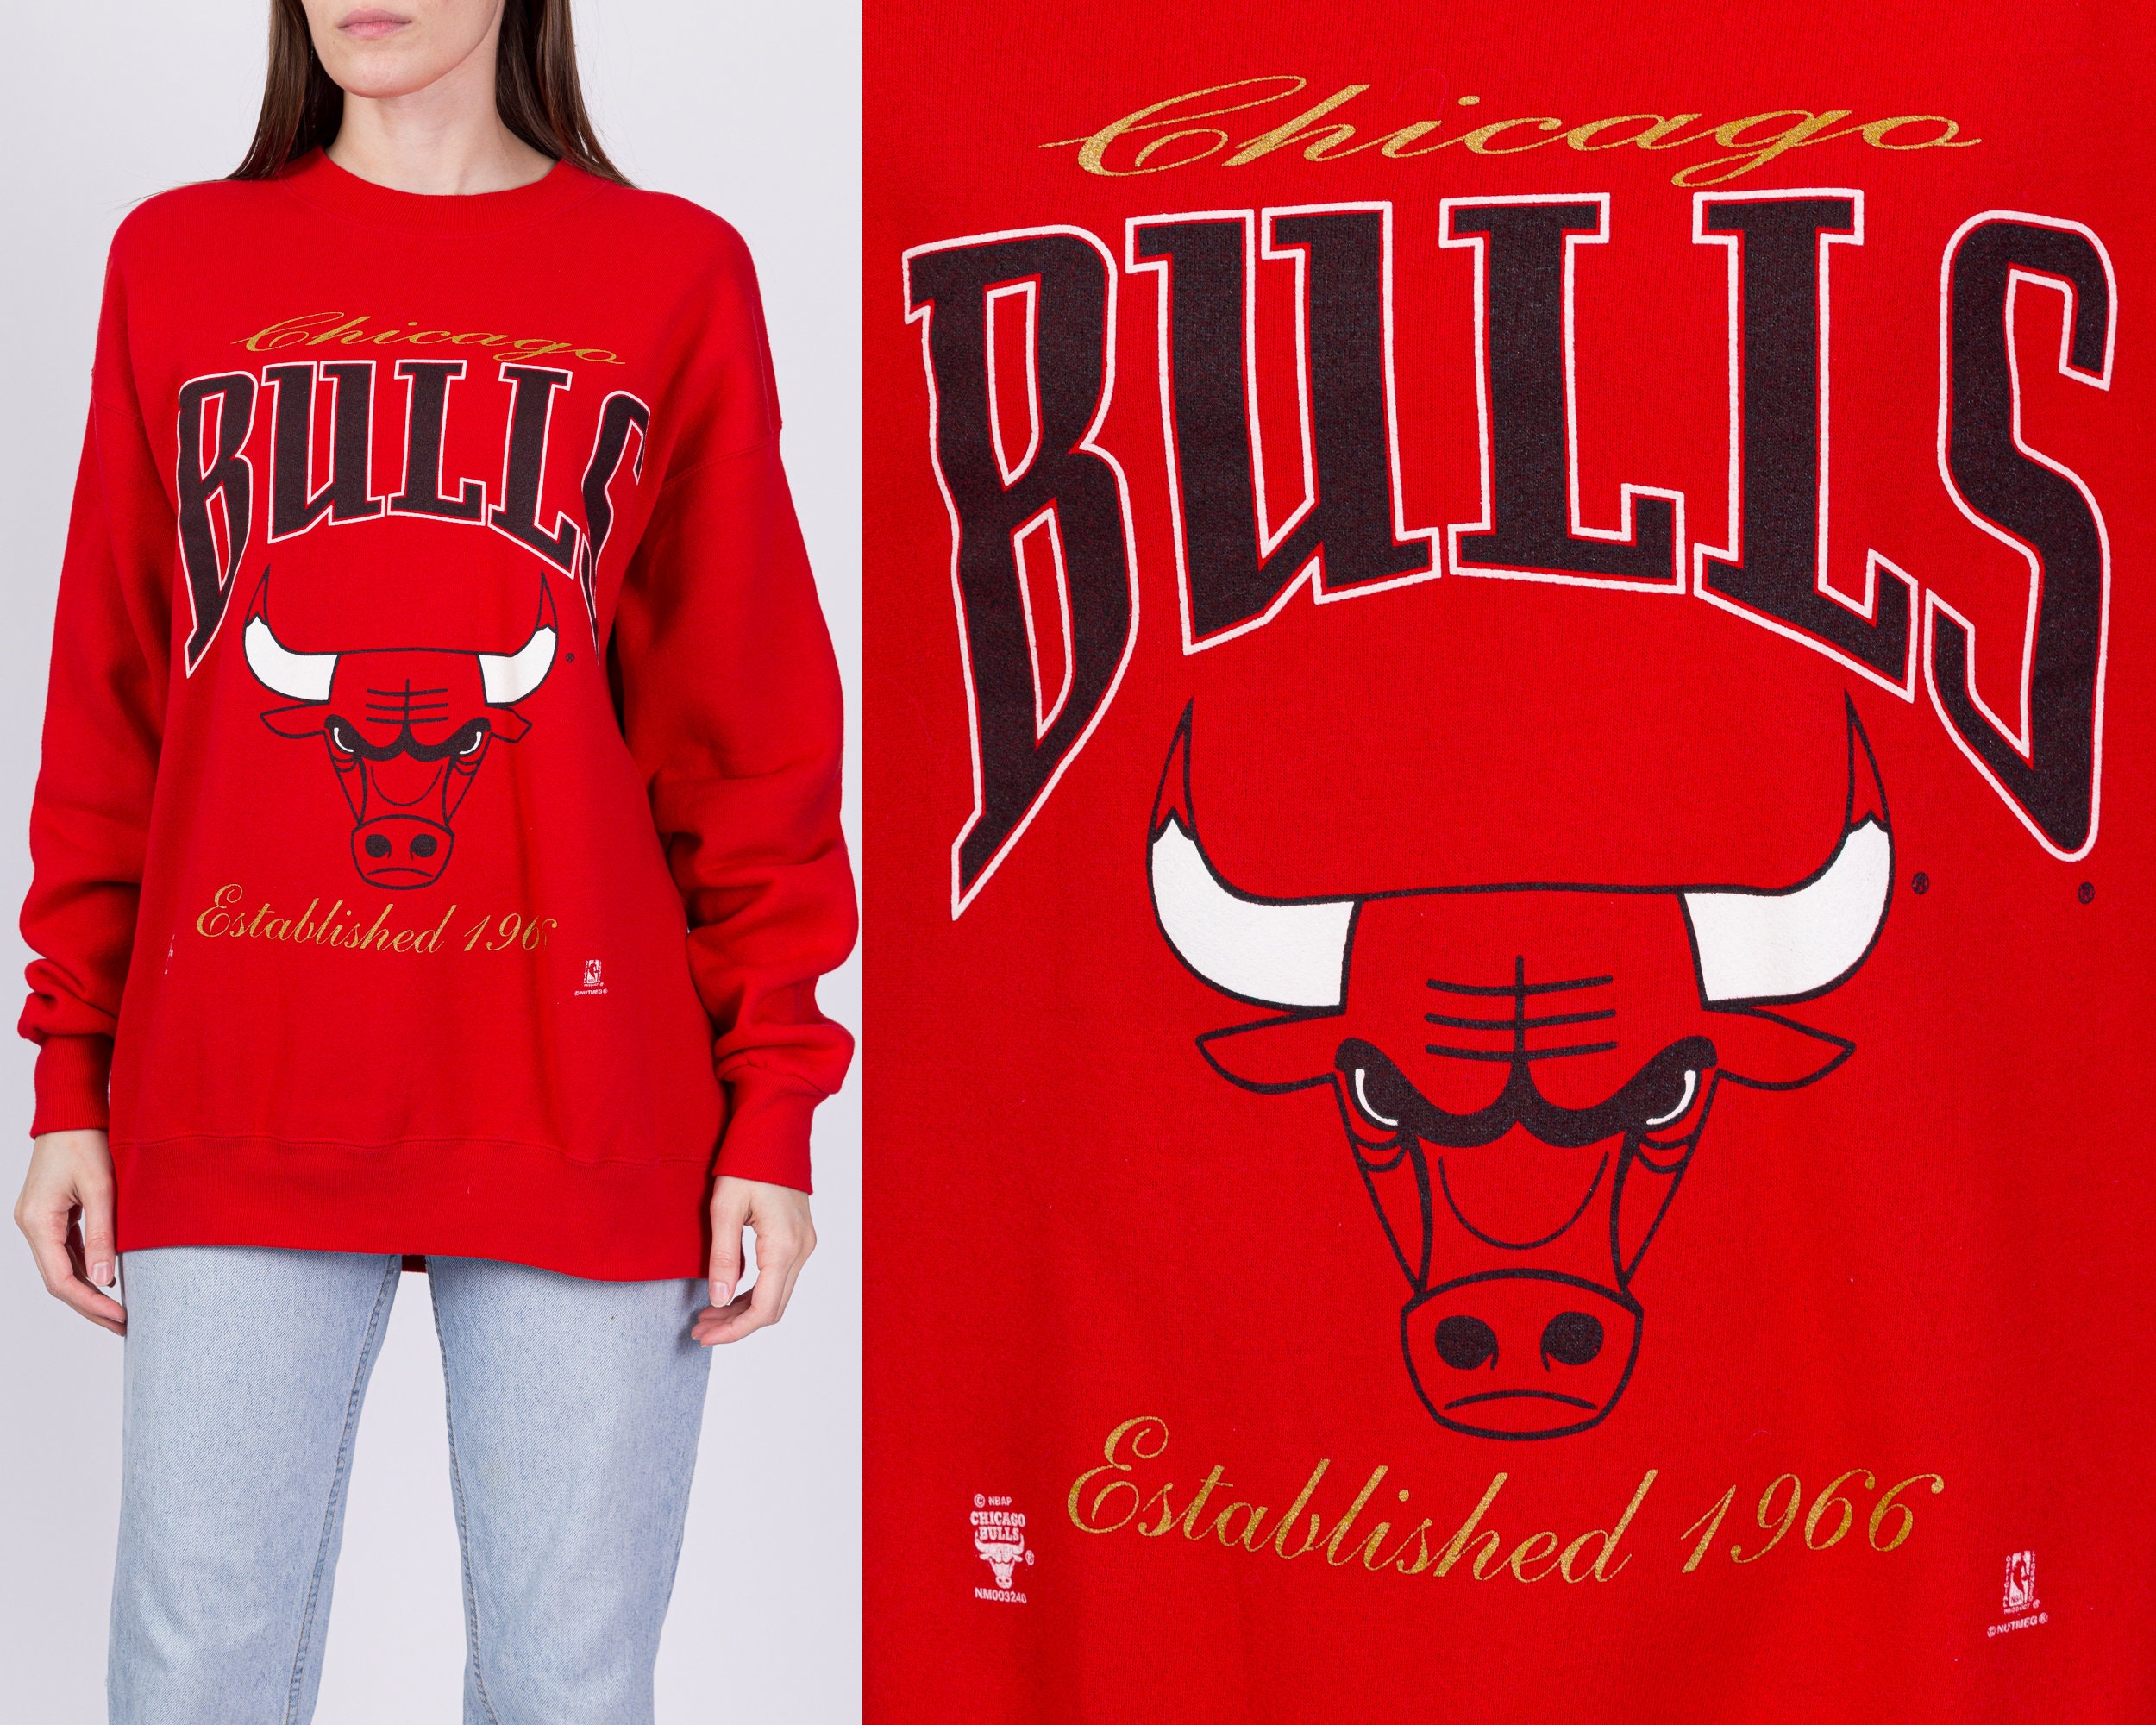 Vintage 90s Nutmeg NBA Chicago Bulls Crewneck Sweatshirt 